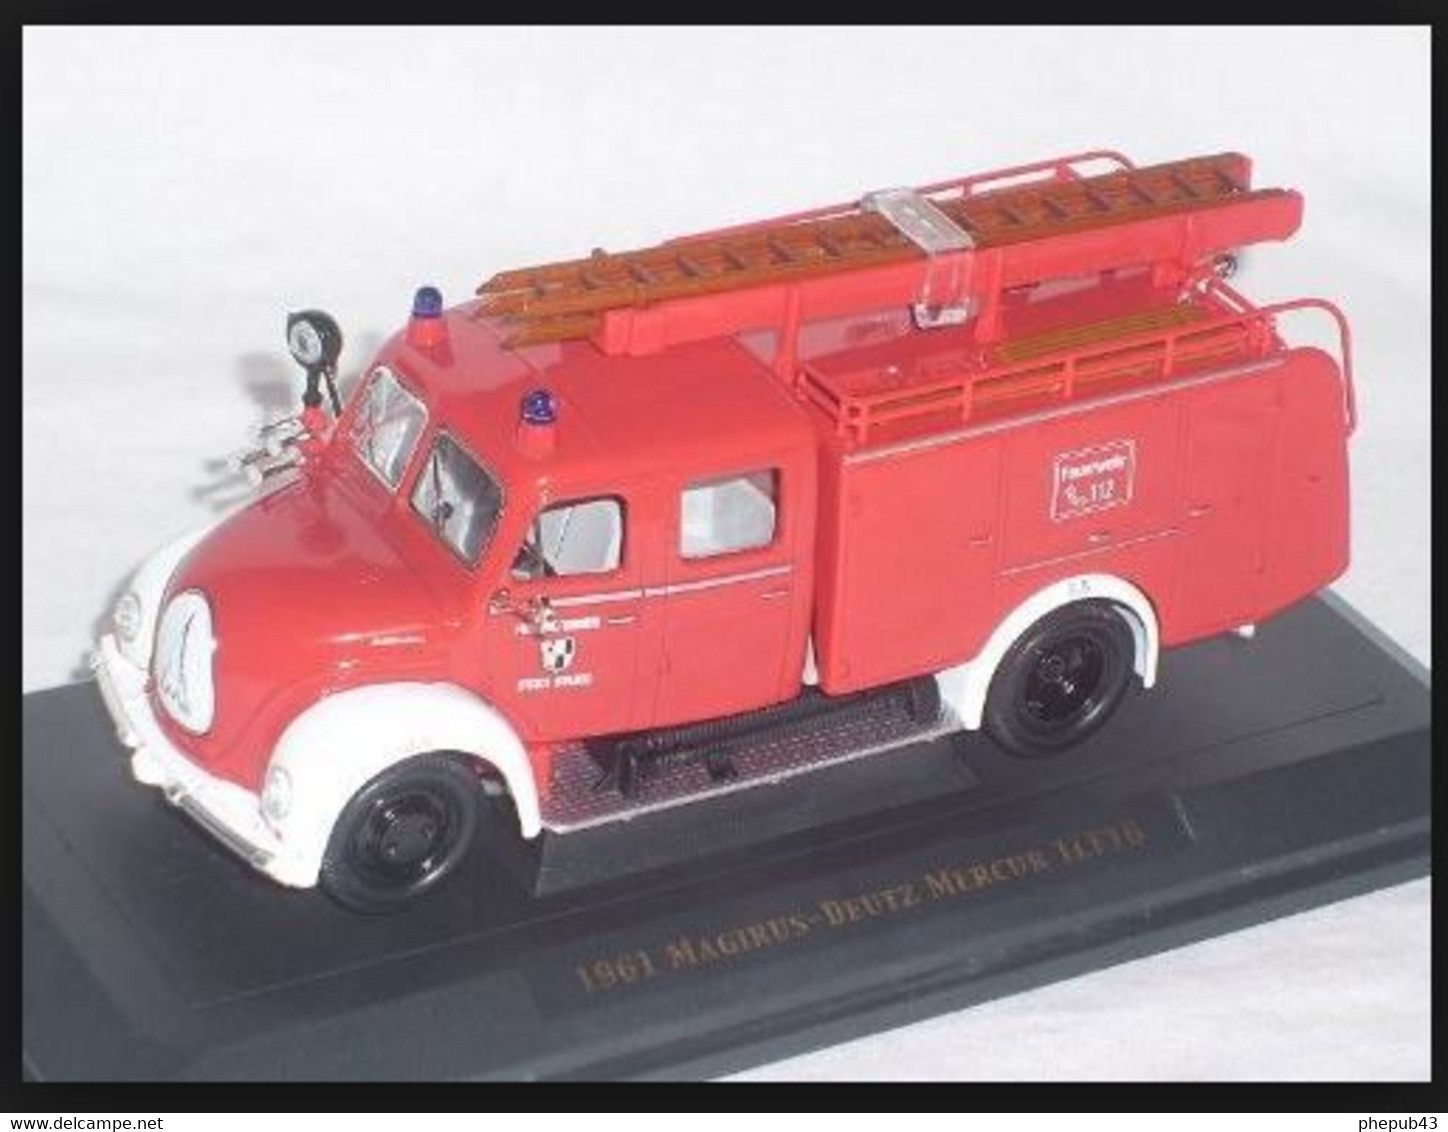 Magirus-Deutz Mercur TLF 16 - Pompiers Selbitz - 1961 - Lucky Die Cast - Autocarri